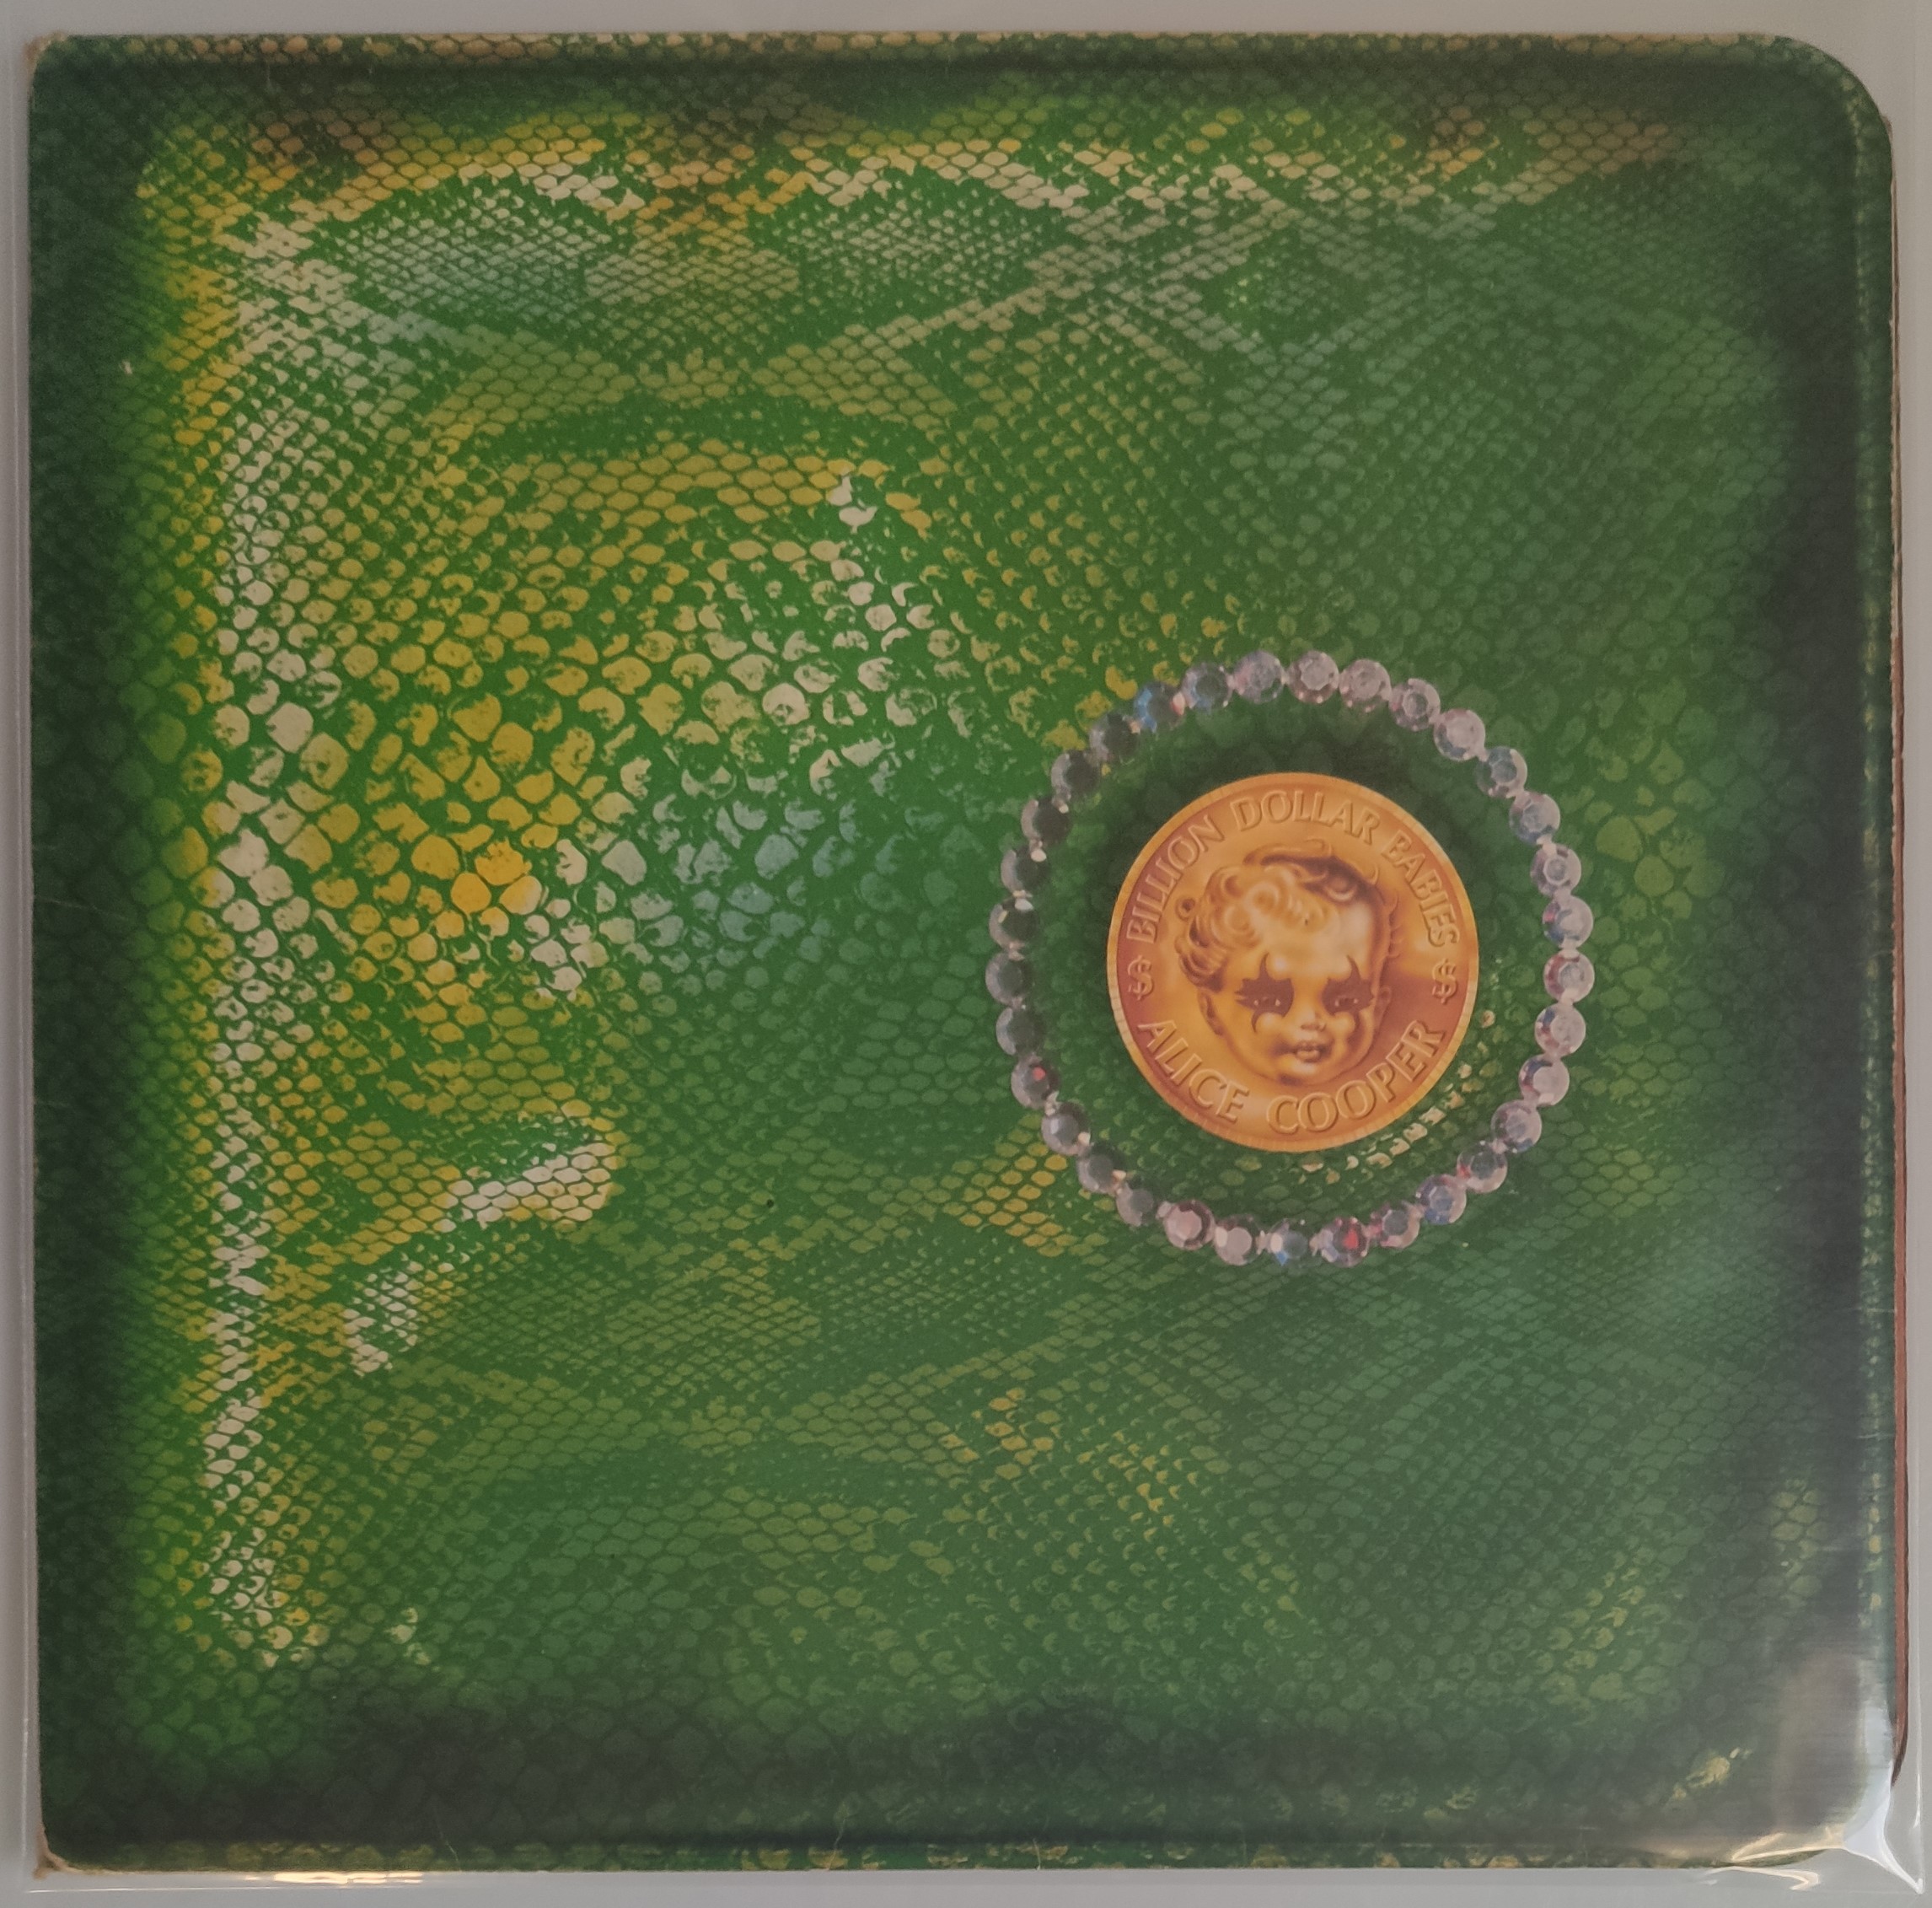 Alice Cooper – Billion Dollars Babies Vinyl LP – UK 1973 First Pressing. Matrix No A1 / B1 - Image 4 of 4